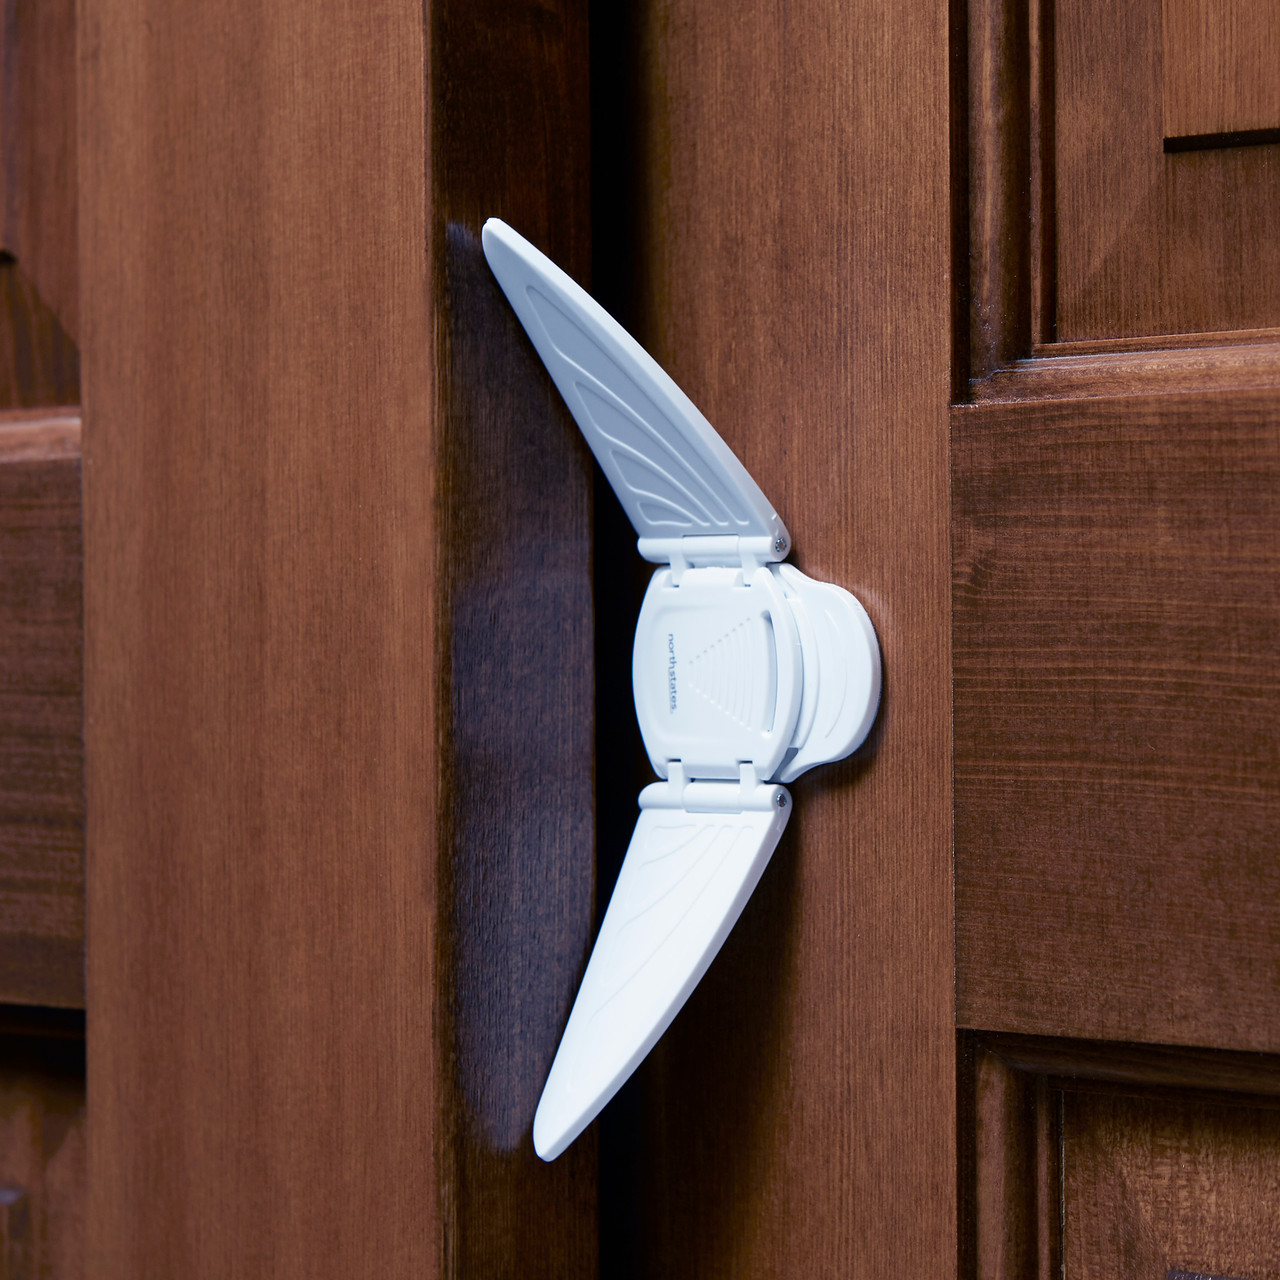 How To Lock Sliding Closet Doors